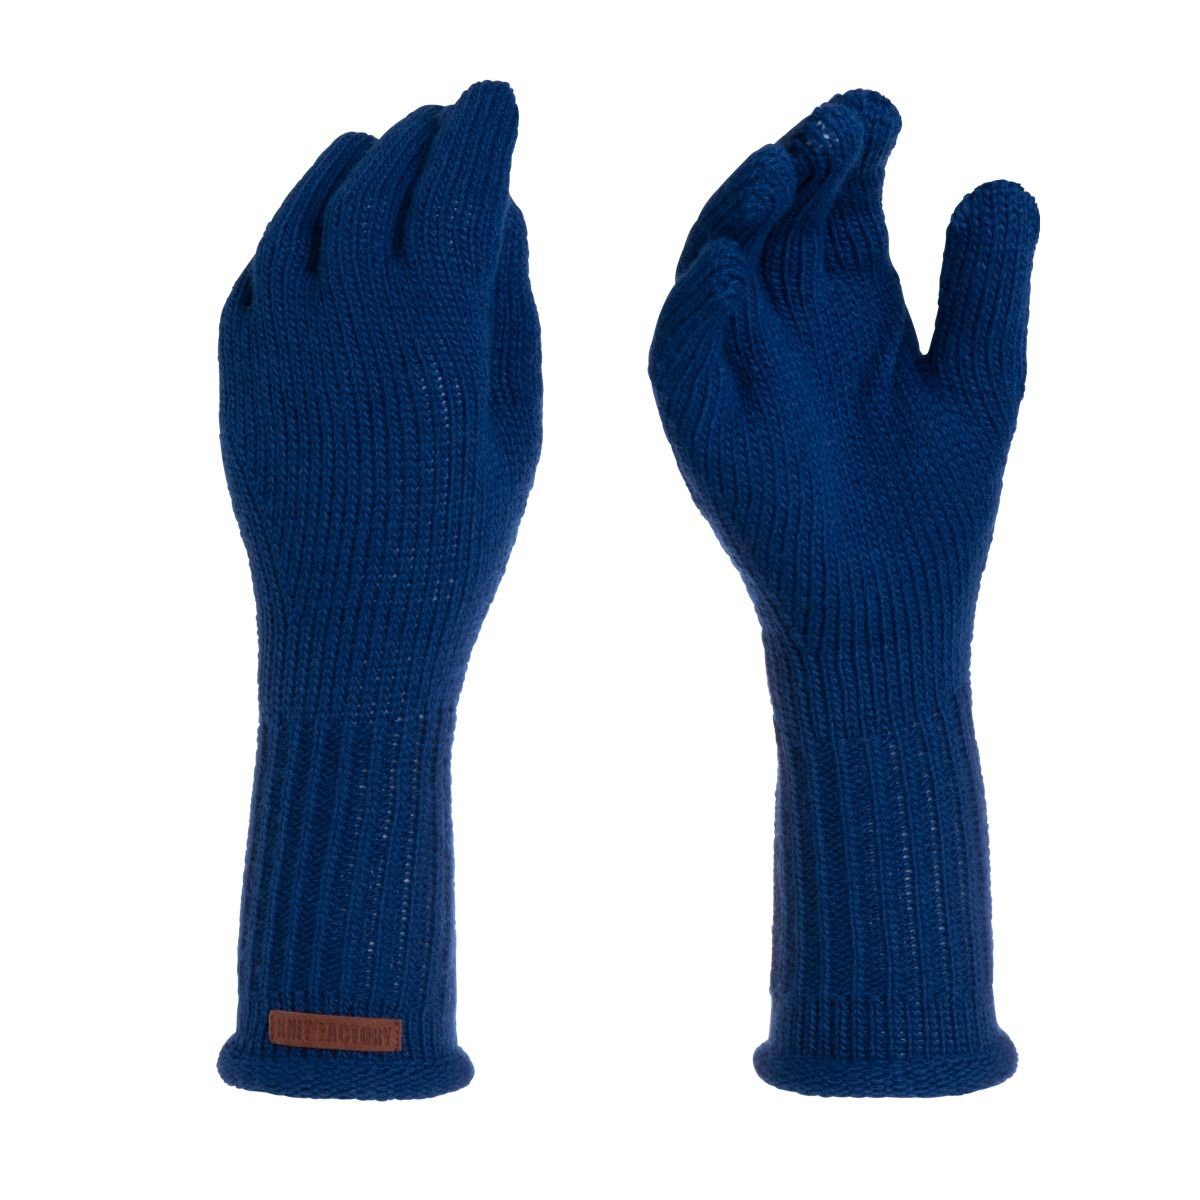 Knit Factory Strickhandschuhe Lana Handschuhe Dunkelblau Size Handschuhe ihne One Finger Handschuhe Handstulpen Glatt